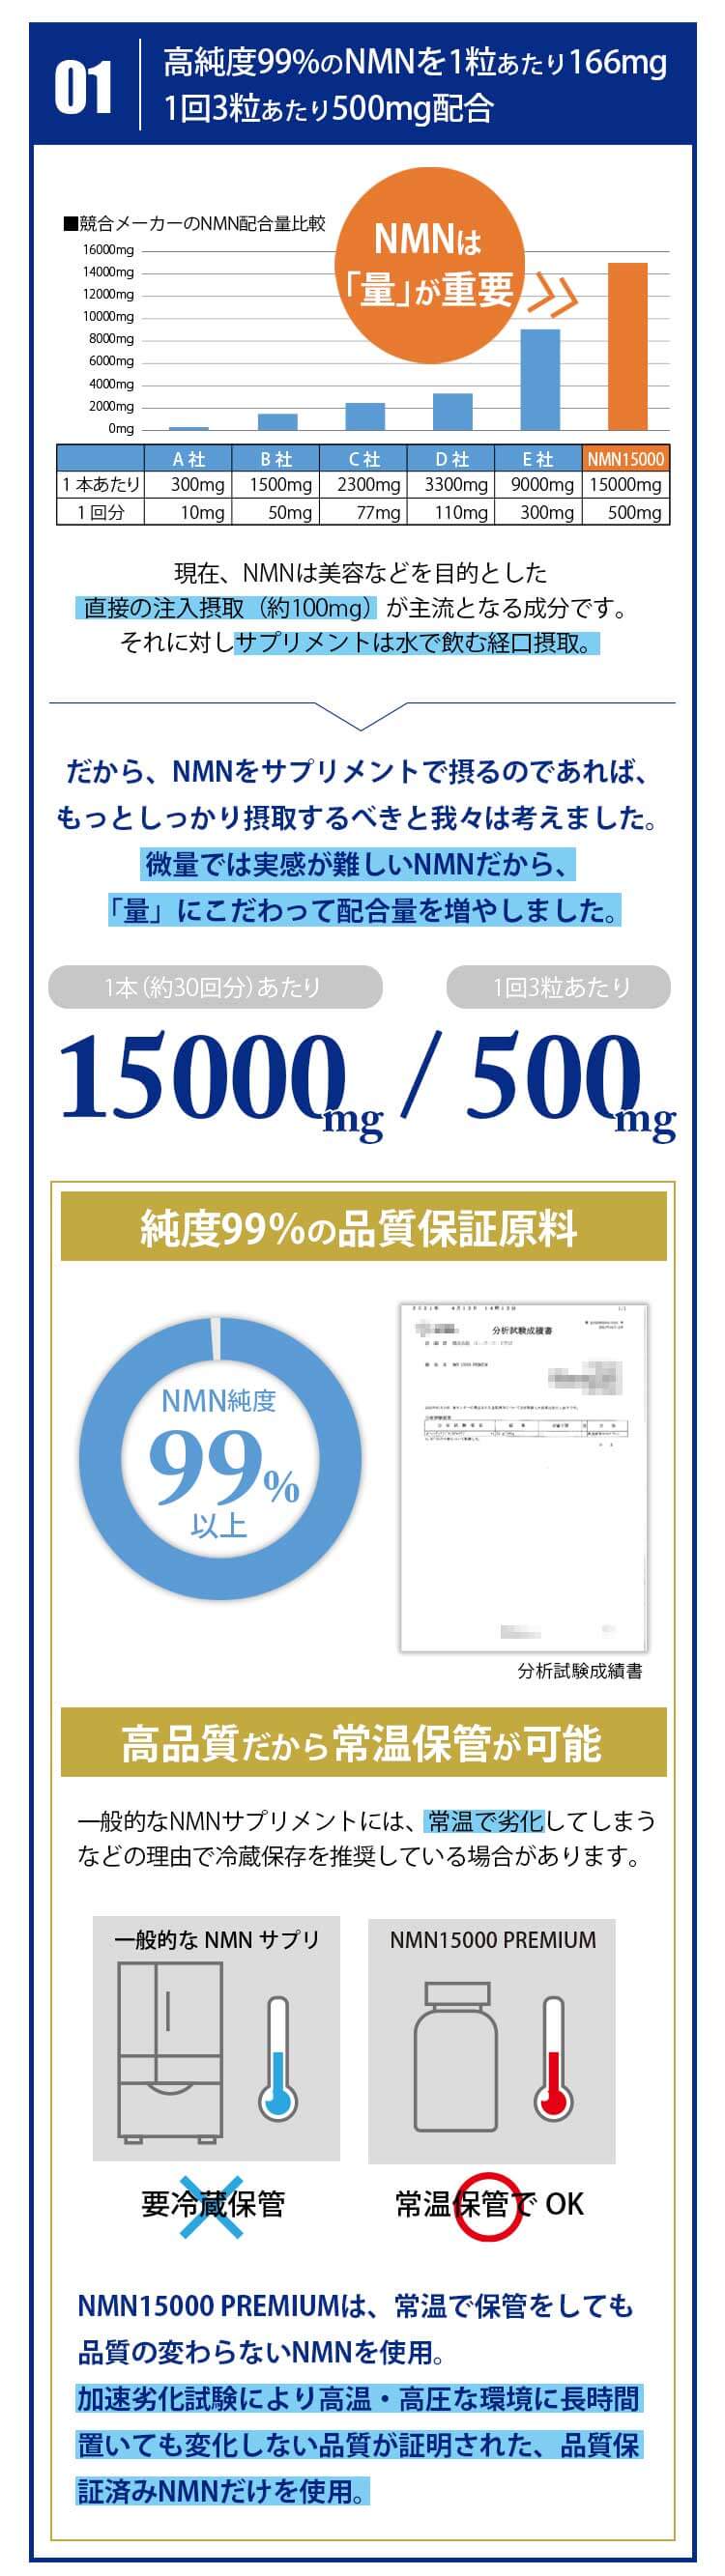 SUPERFOOD NUTRIENTS No.002 / NMN 15000 PREMIUM | 新谷酵素公式通販